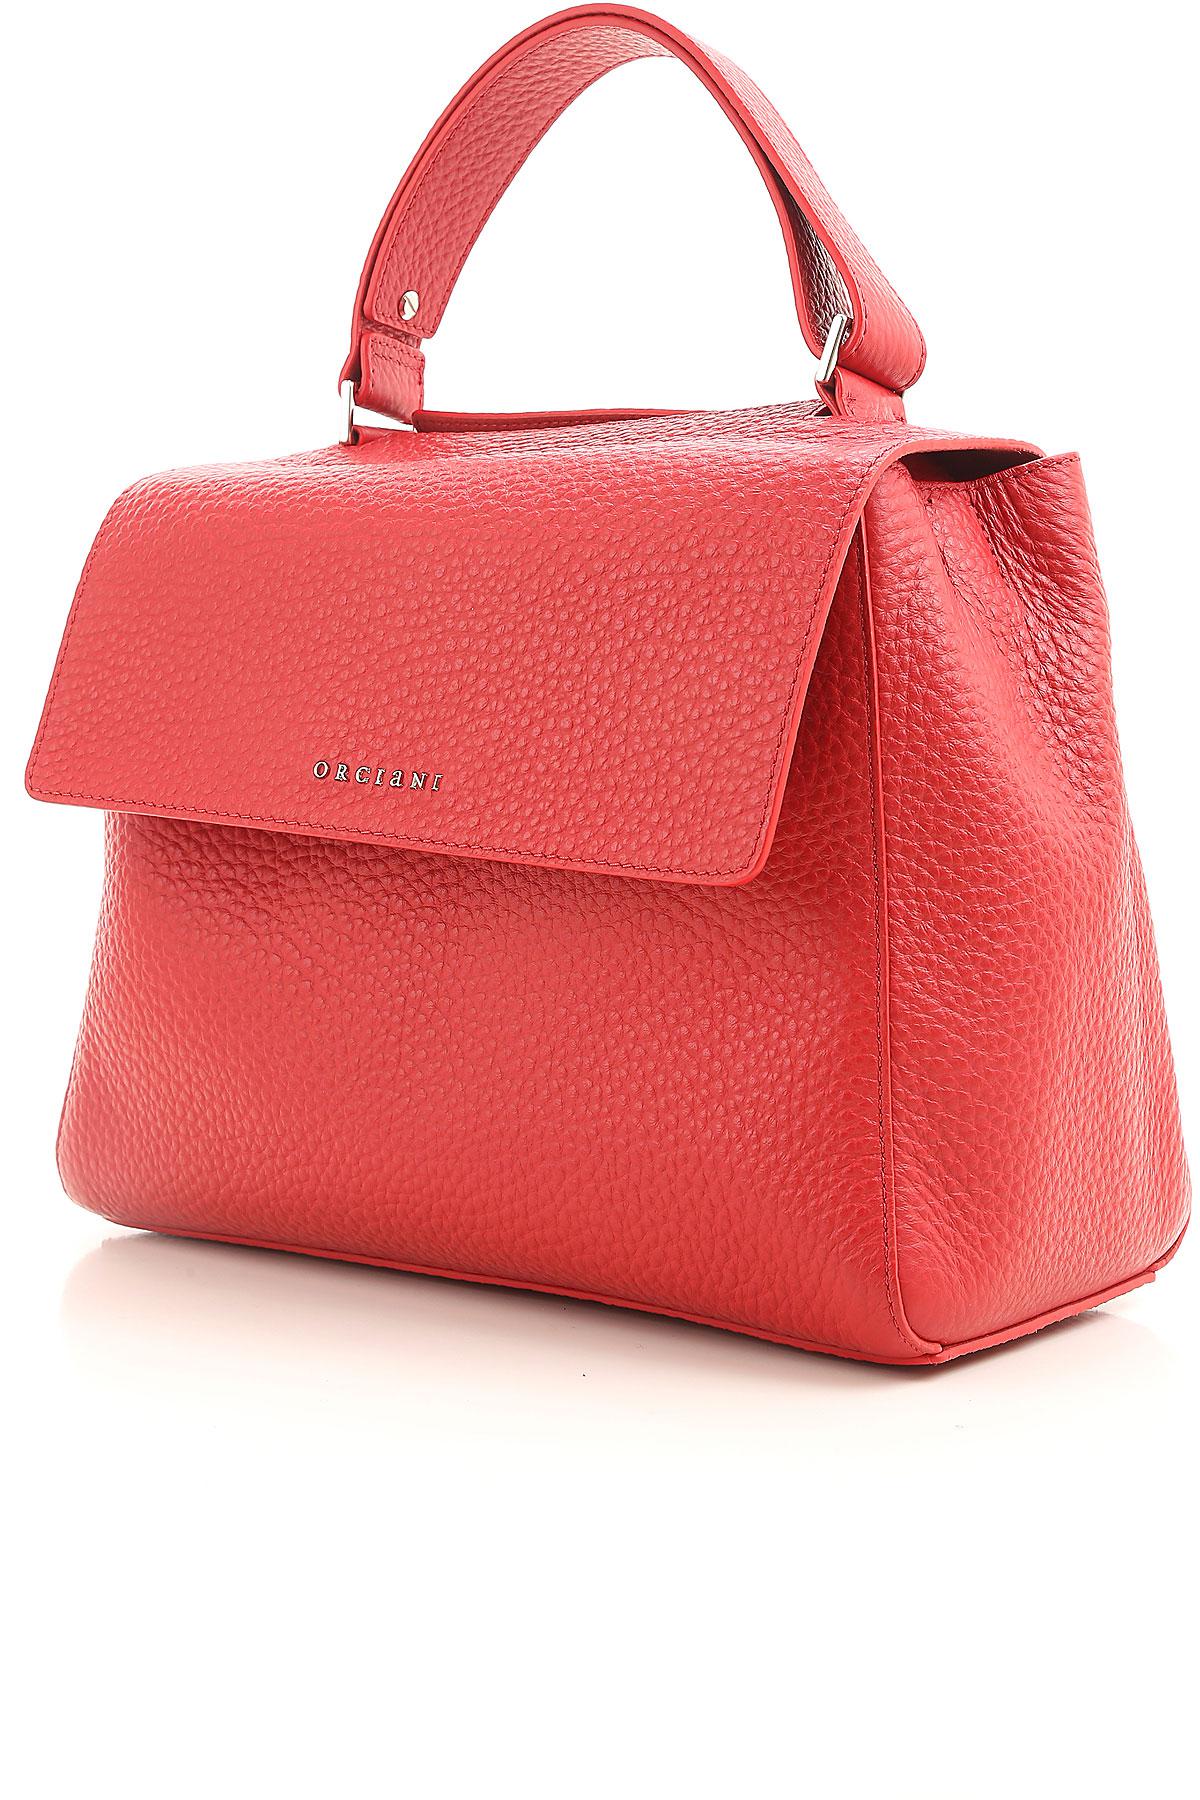 Orciani Leather Sveva Medium Bag In Marlboro Color in Red - Save 40% - Lyst